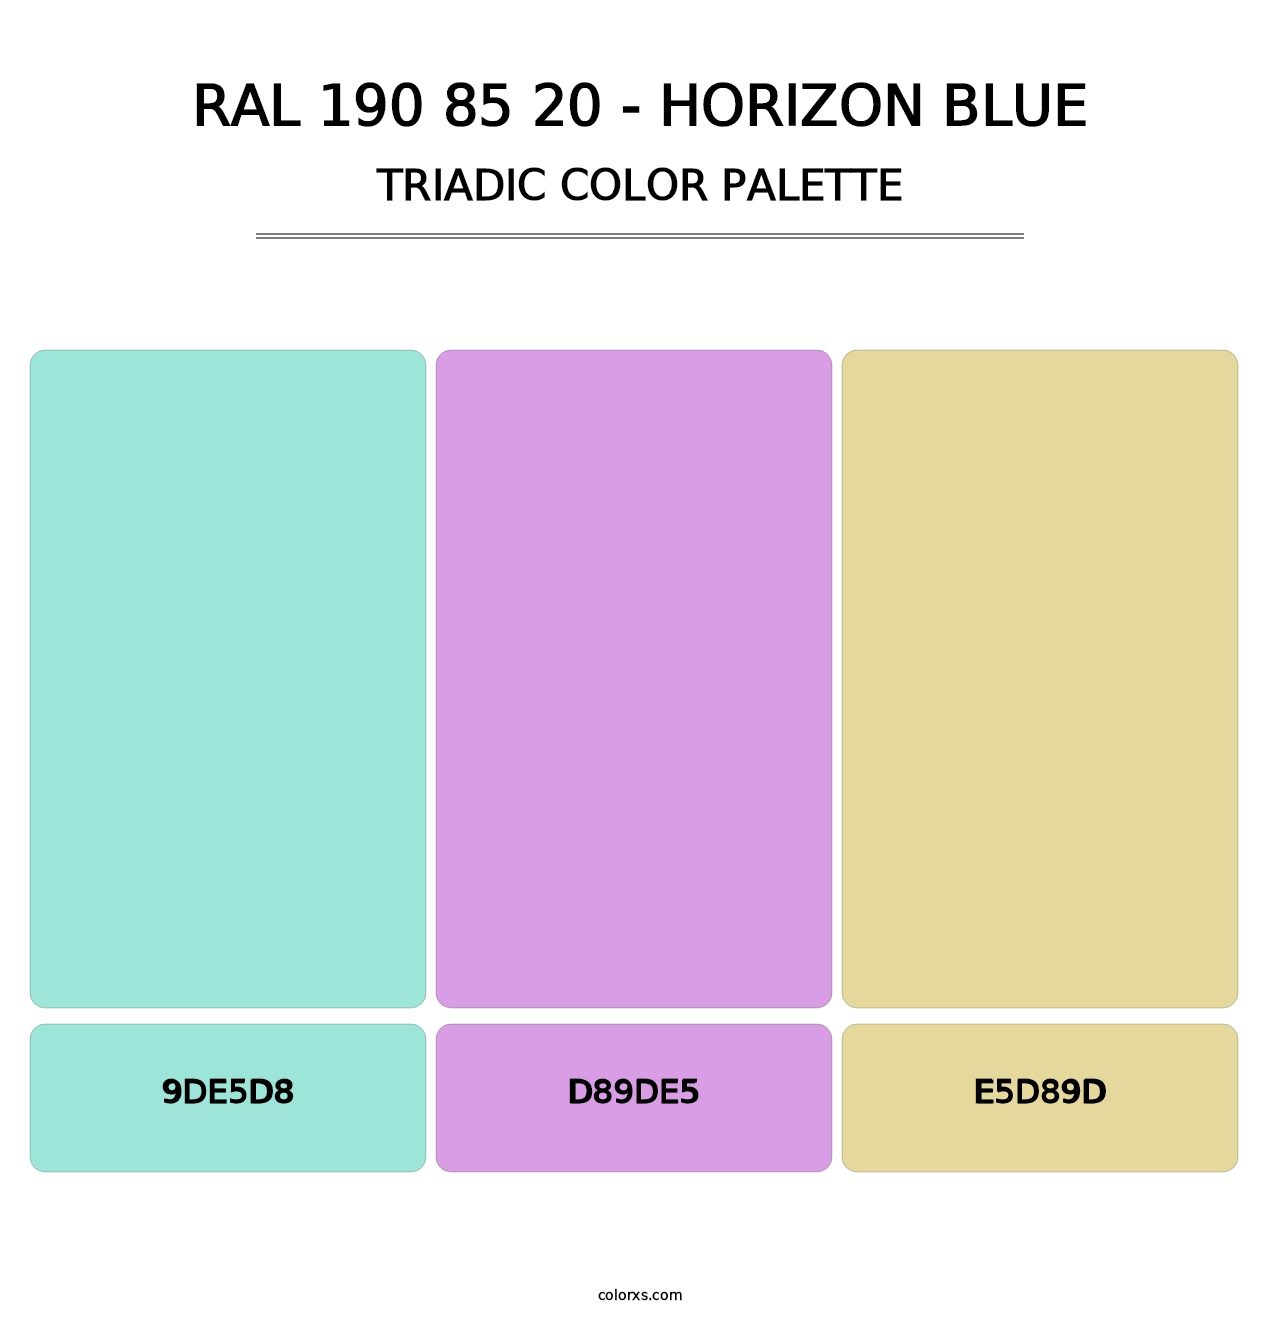 RAL 190 85 20 - Horizon Blue - Triadic Color Palette